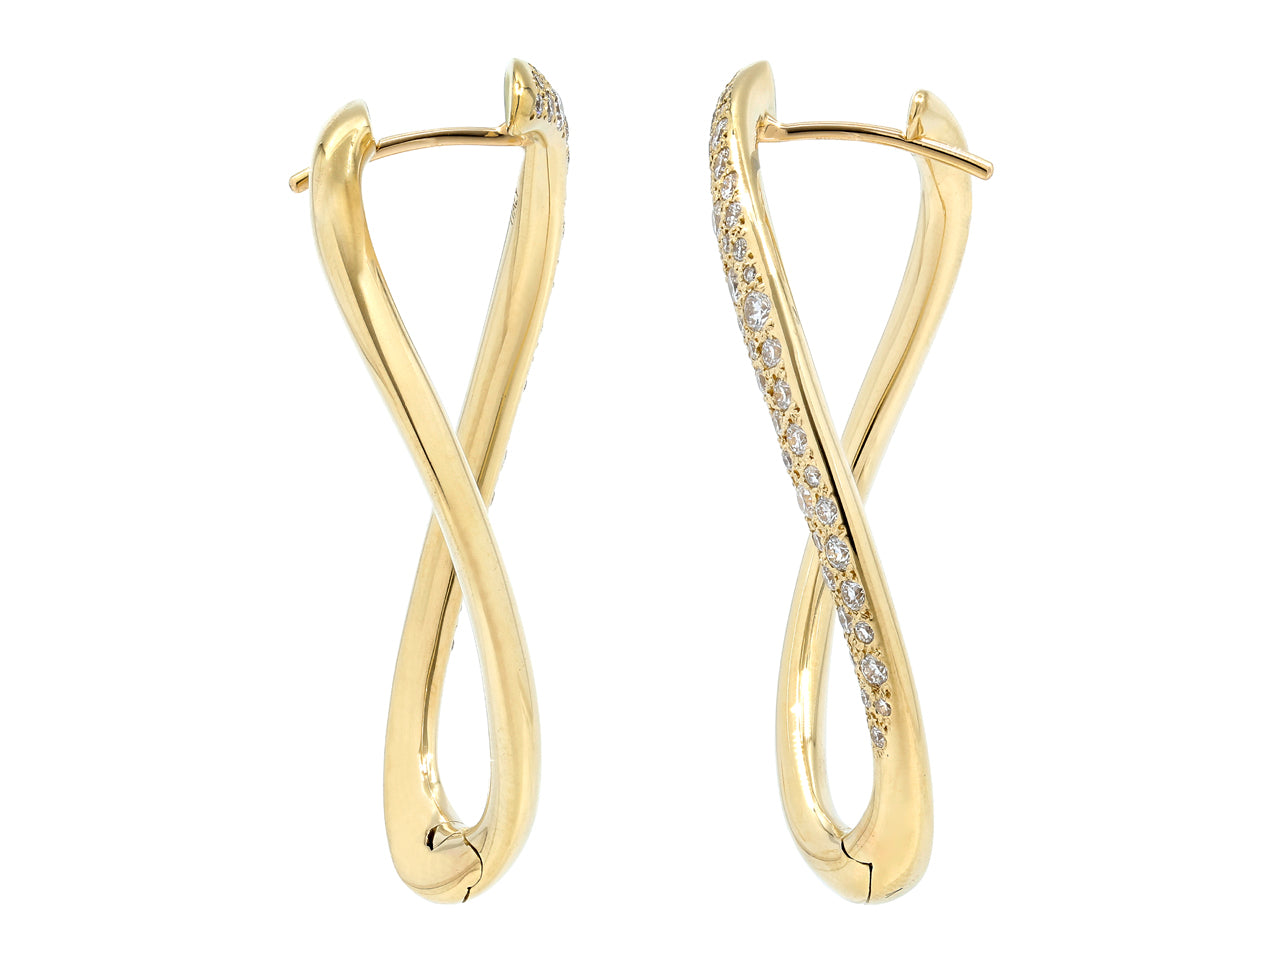 Diamond Loop Earrings in 18K Gold, by Beladora